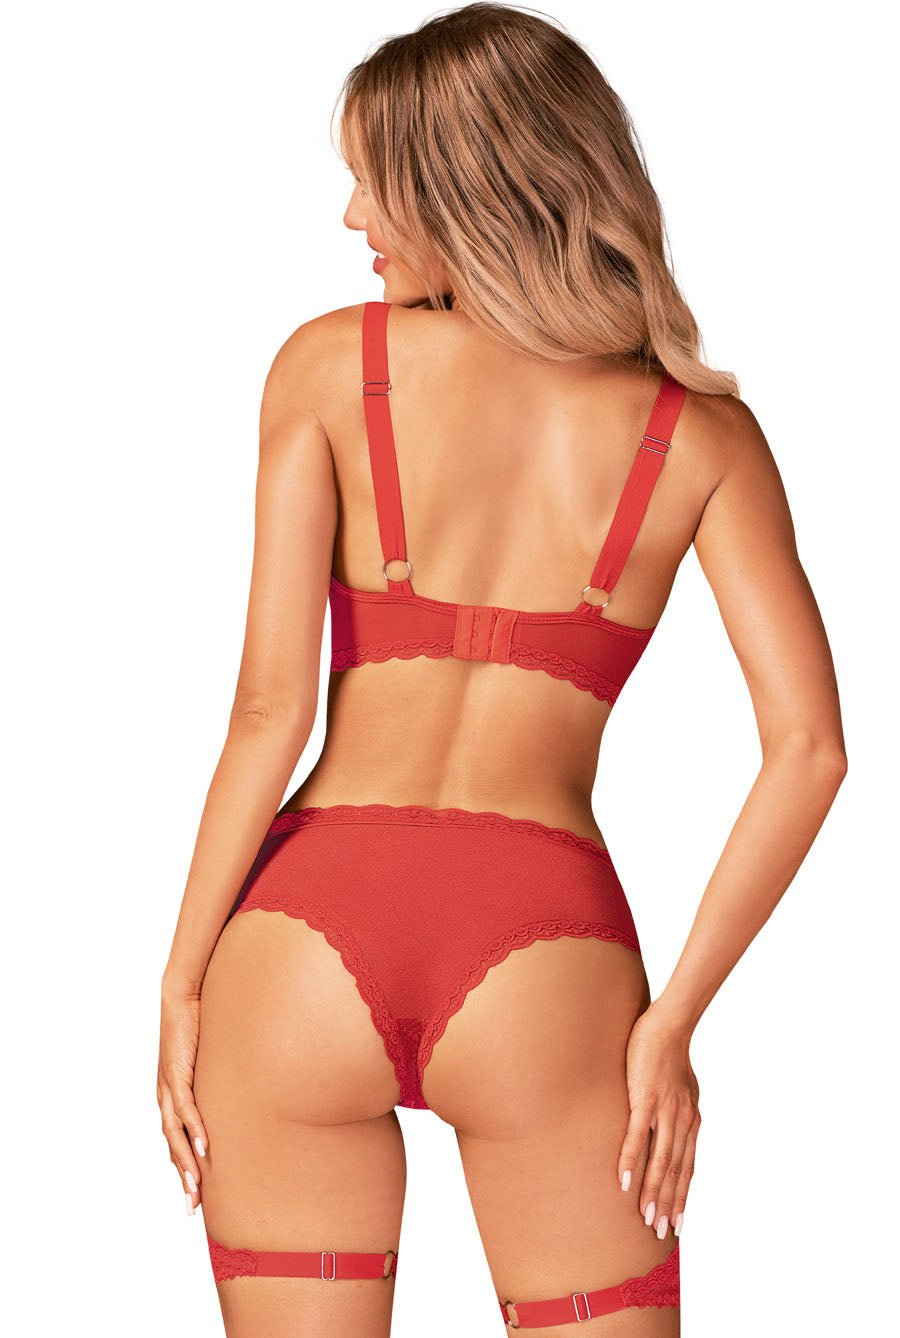 sexy red bra set